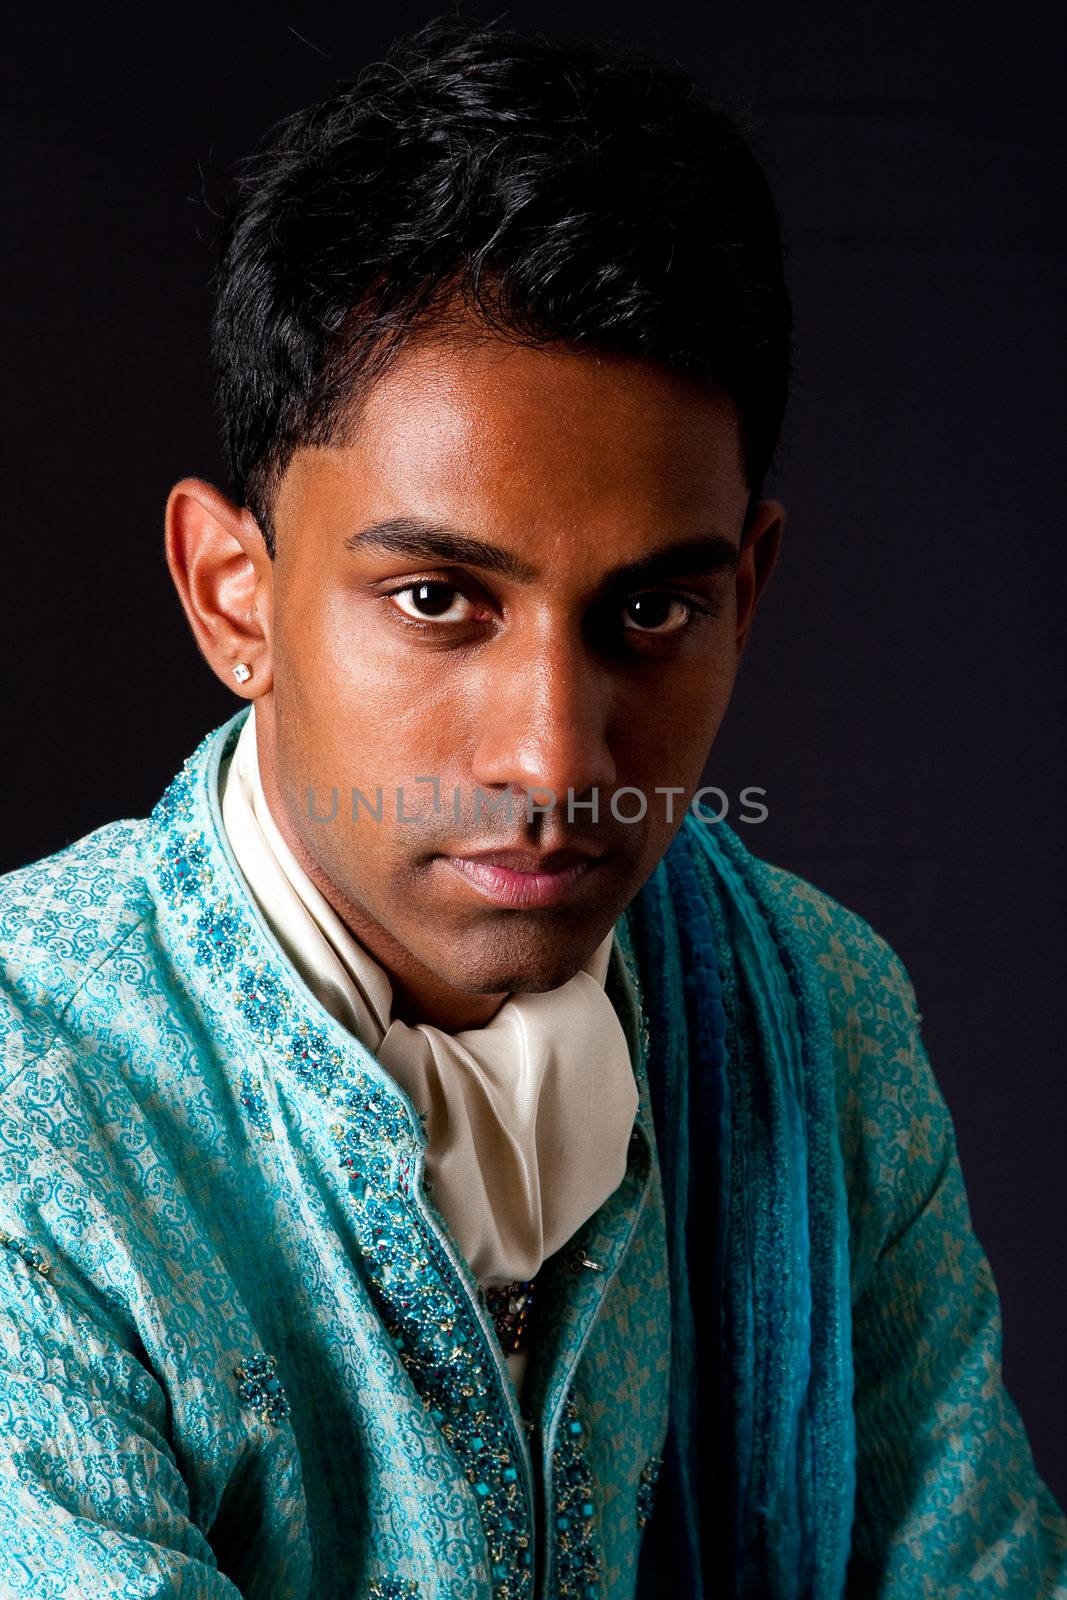 Handsome Hindu man by phakimata